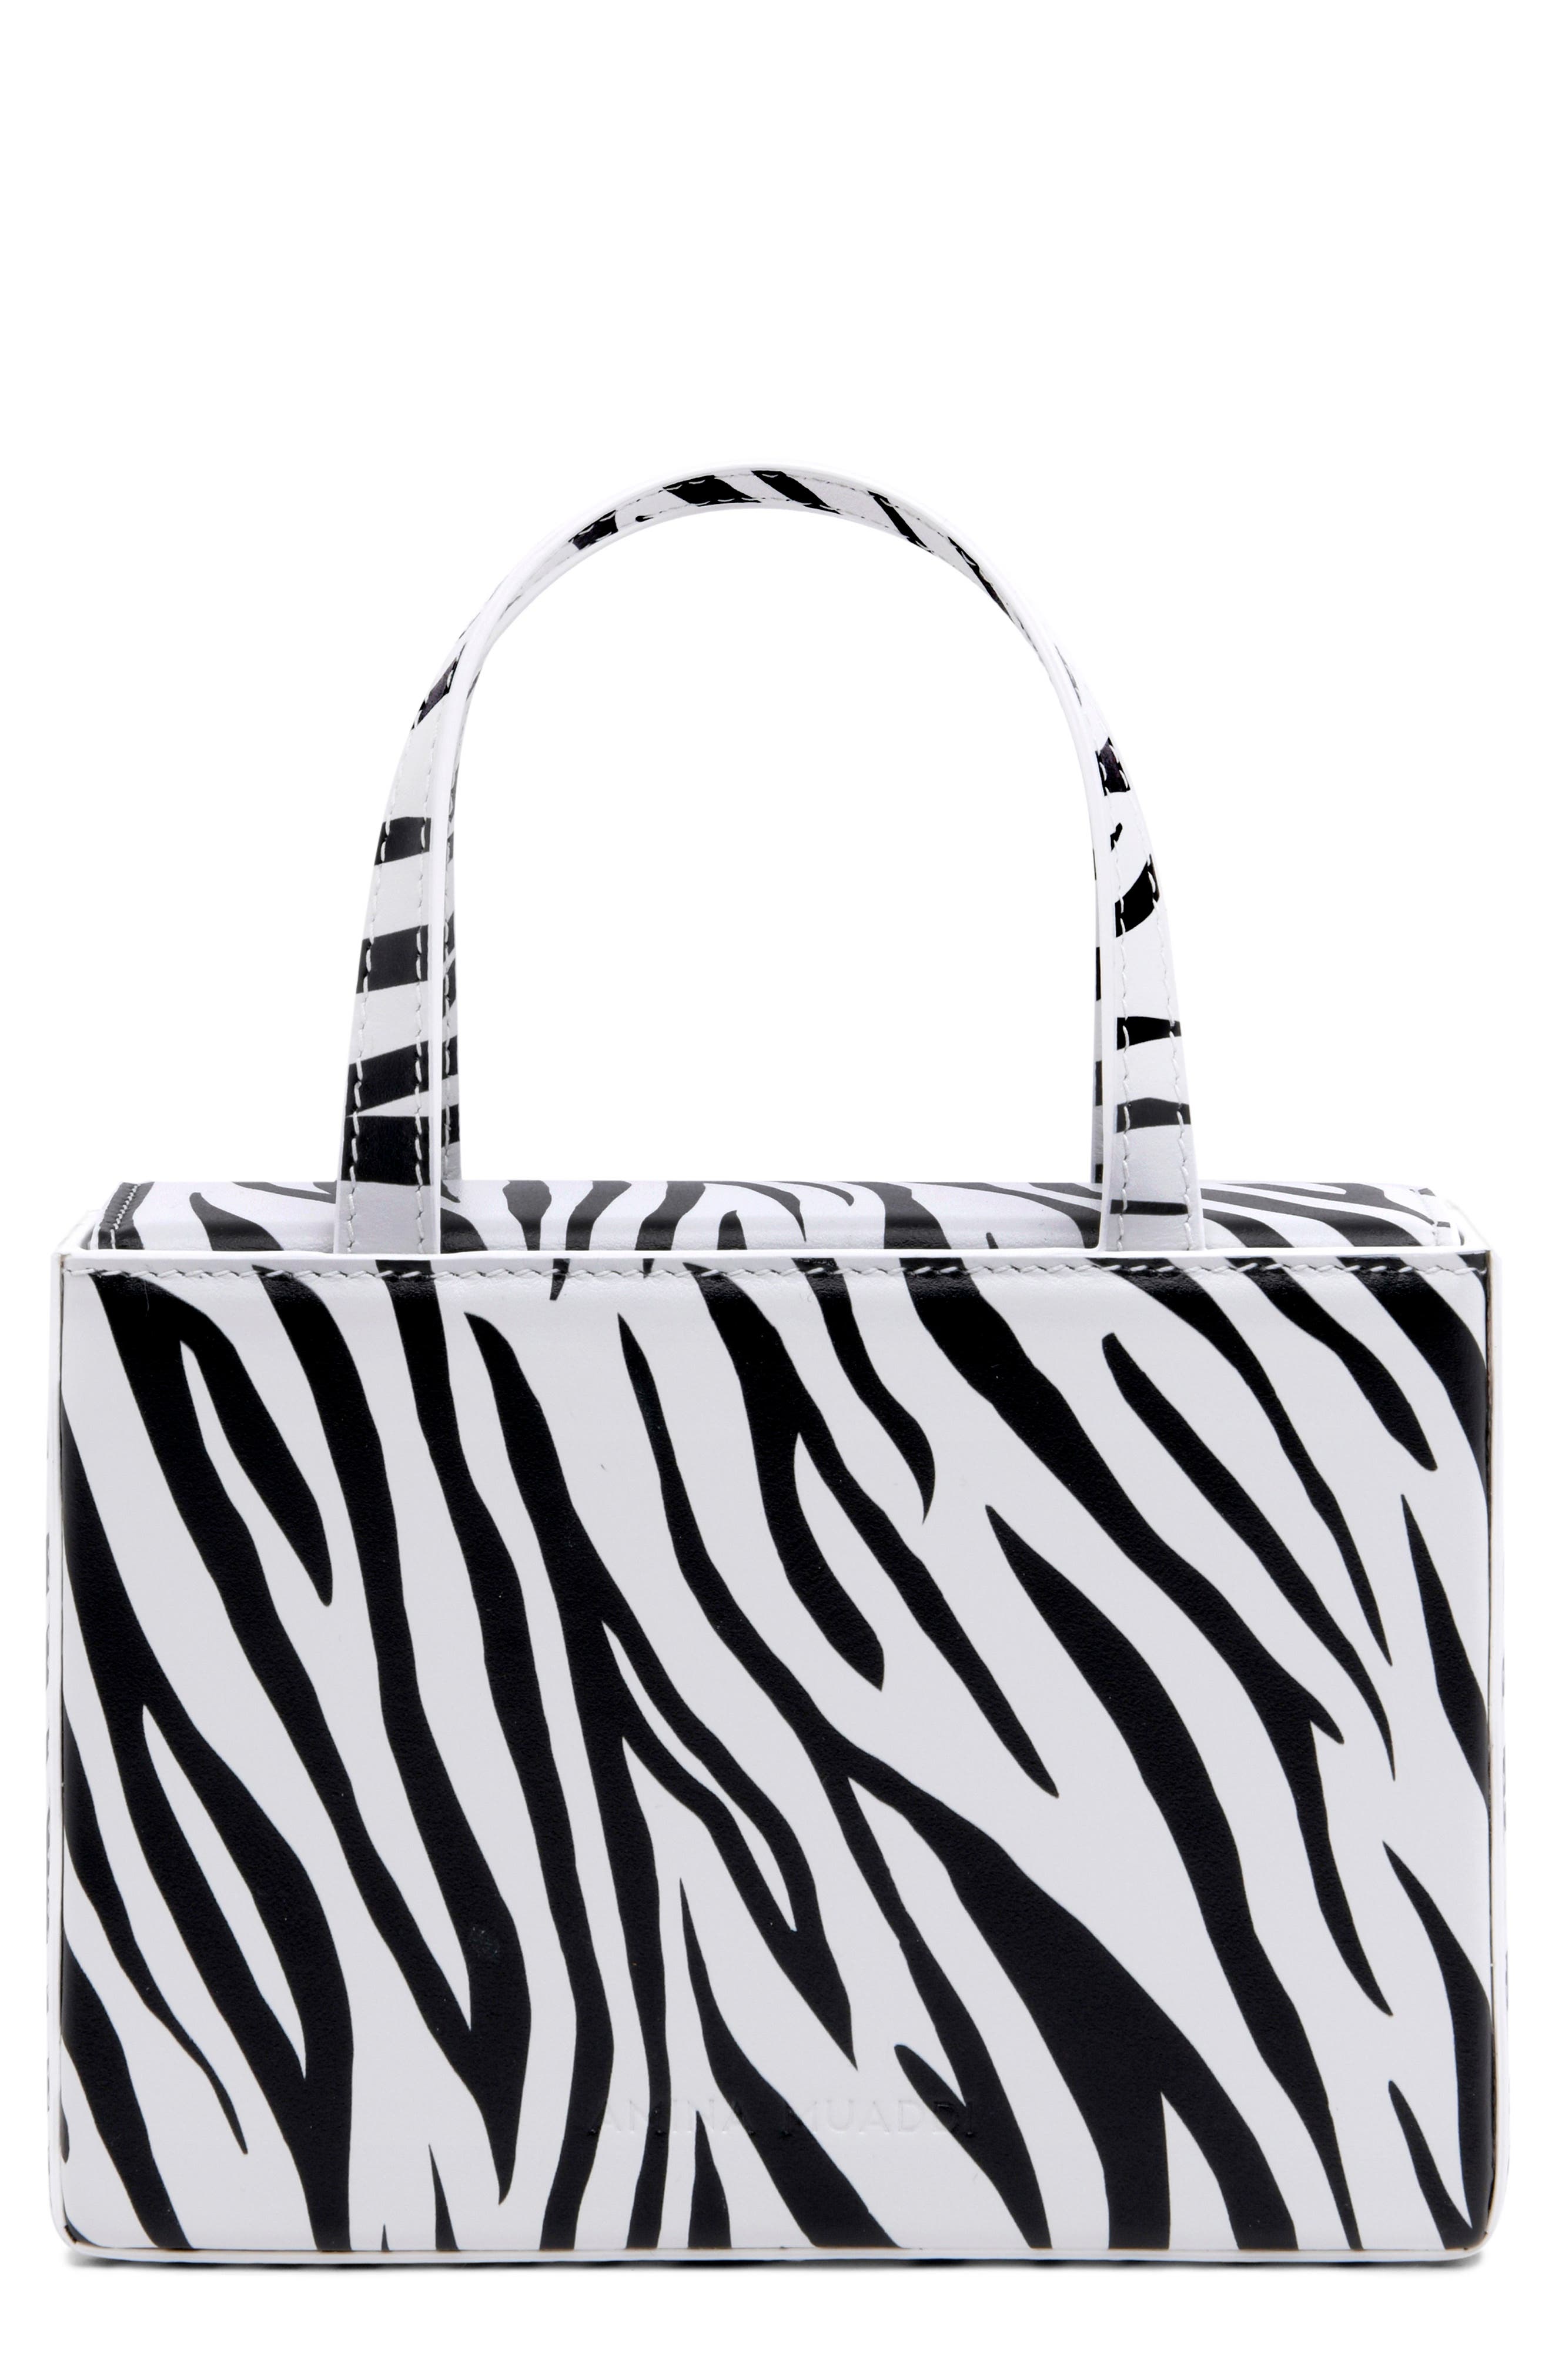 Amina Muaddi Amini Georgia Zebra Print Leather Top Handle Bag in Zebra Print Nappa at Nordstrom